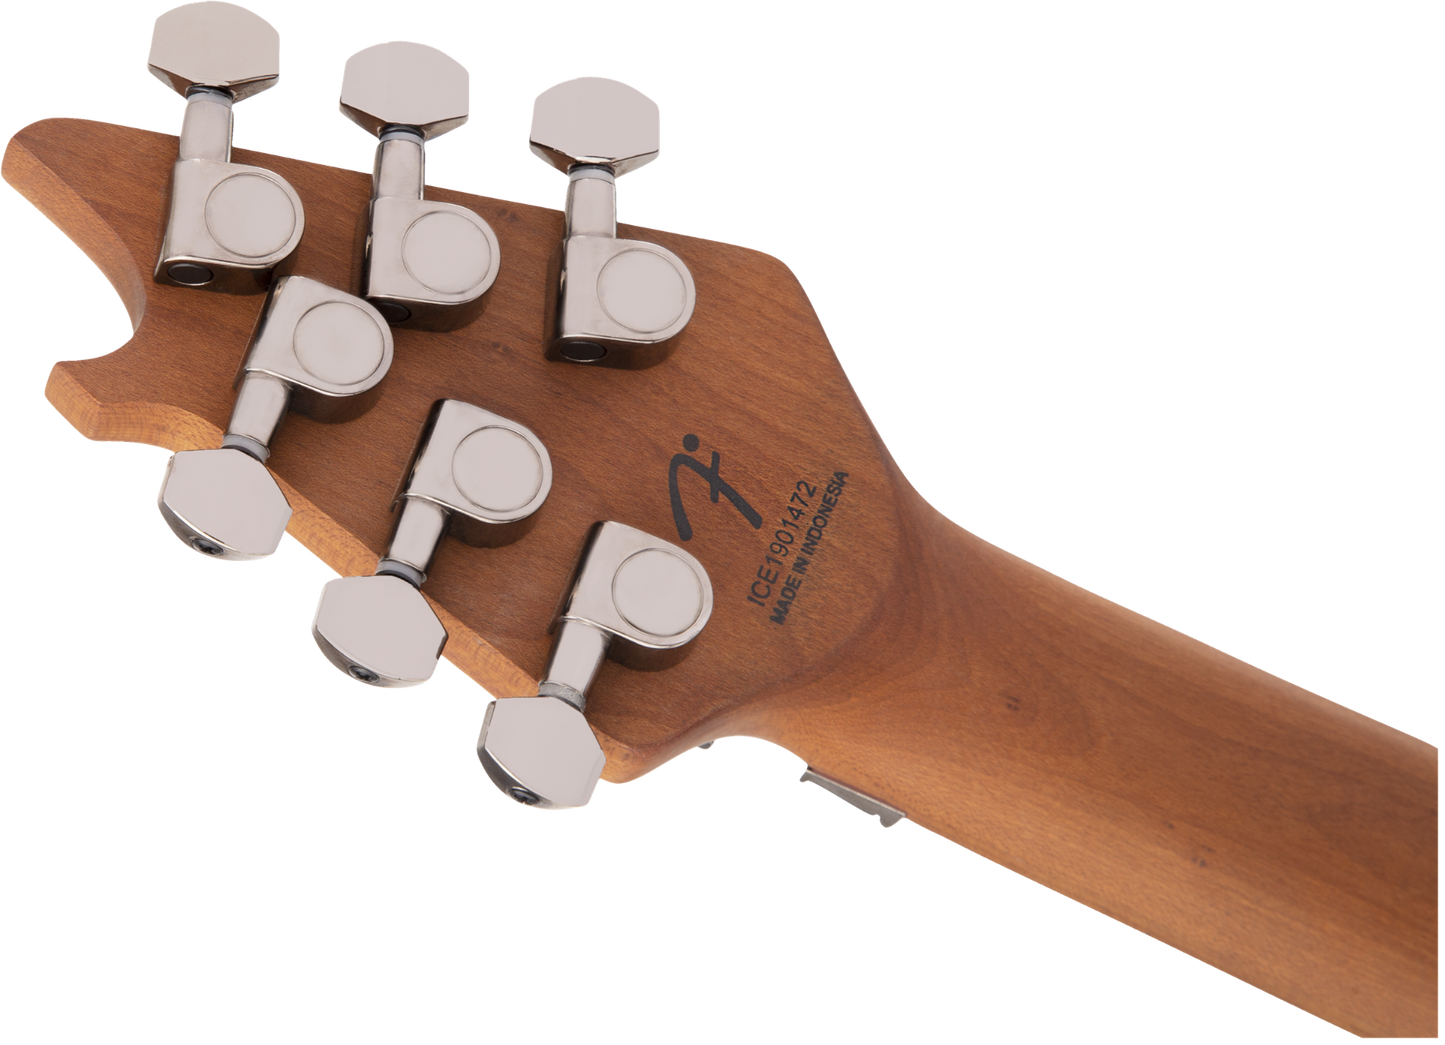 EVH Wolfgang® Standard QM Electric Guitar Baked Maple Fingerboard, Northern Lights